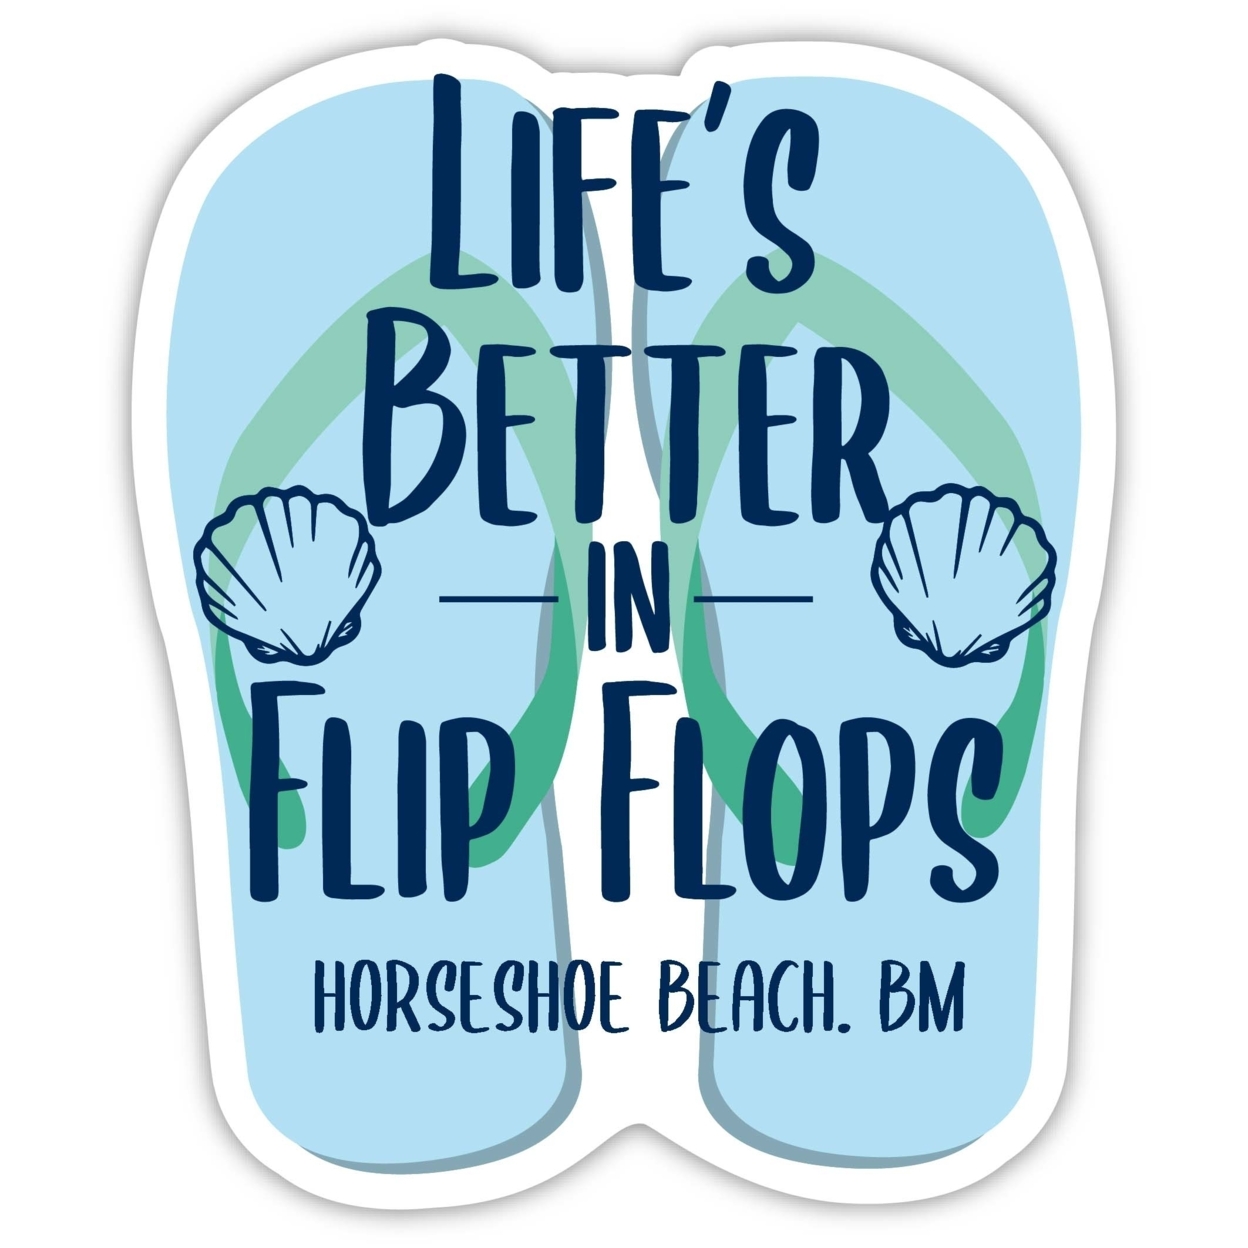 Horseshoe Beach Bermuda Souvenir 4 Inch Vinyl Decal Sticker Flip Flop Design